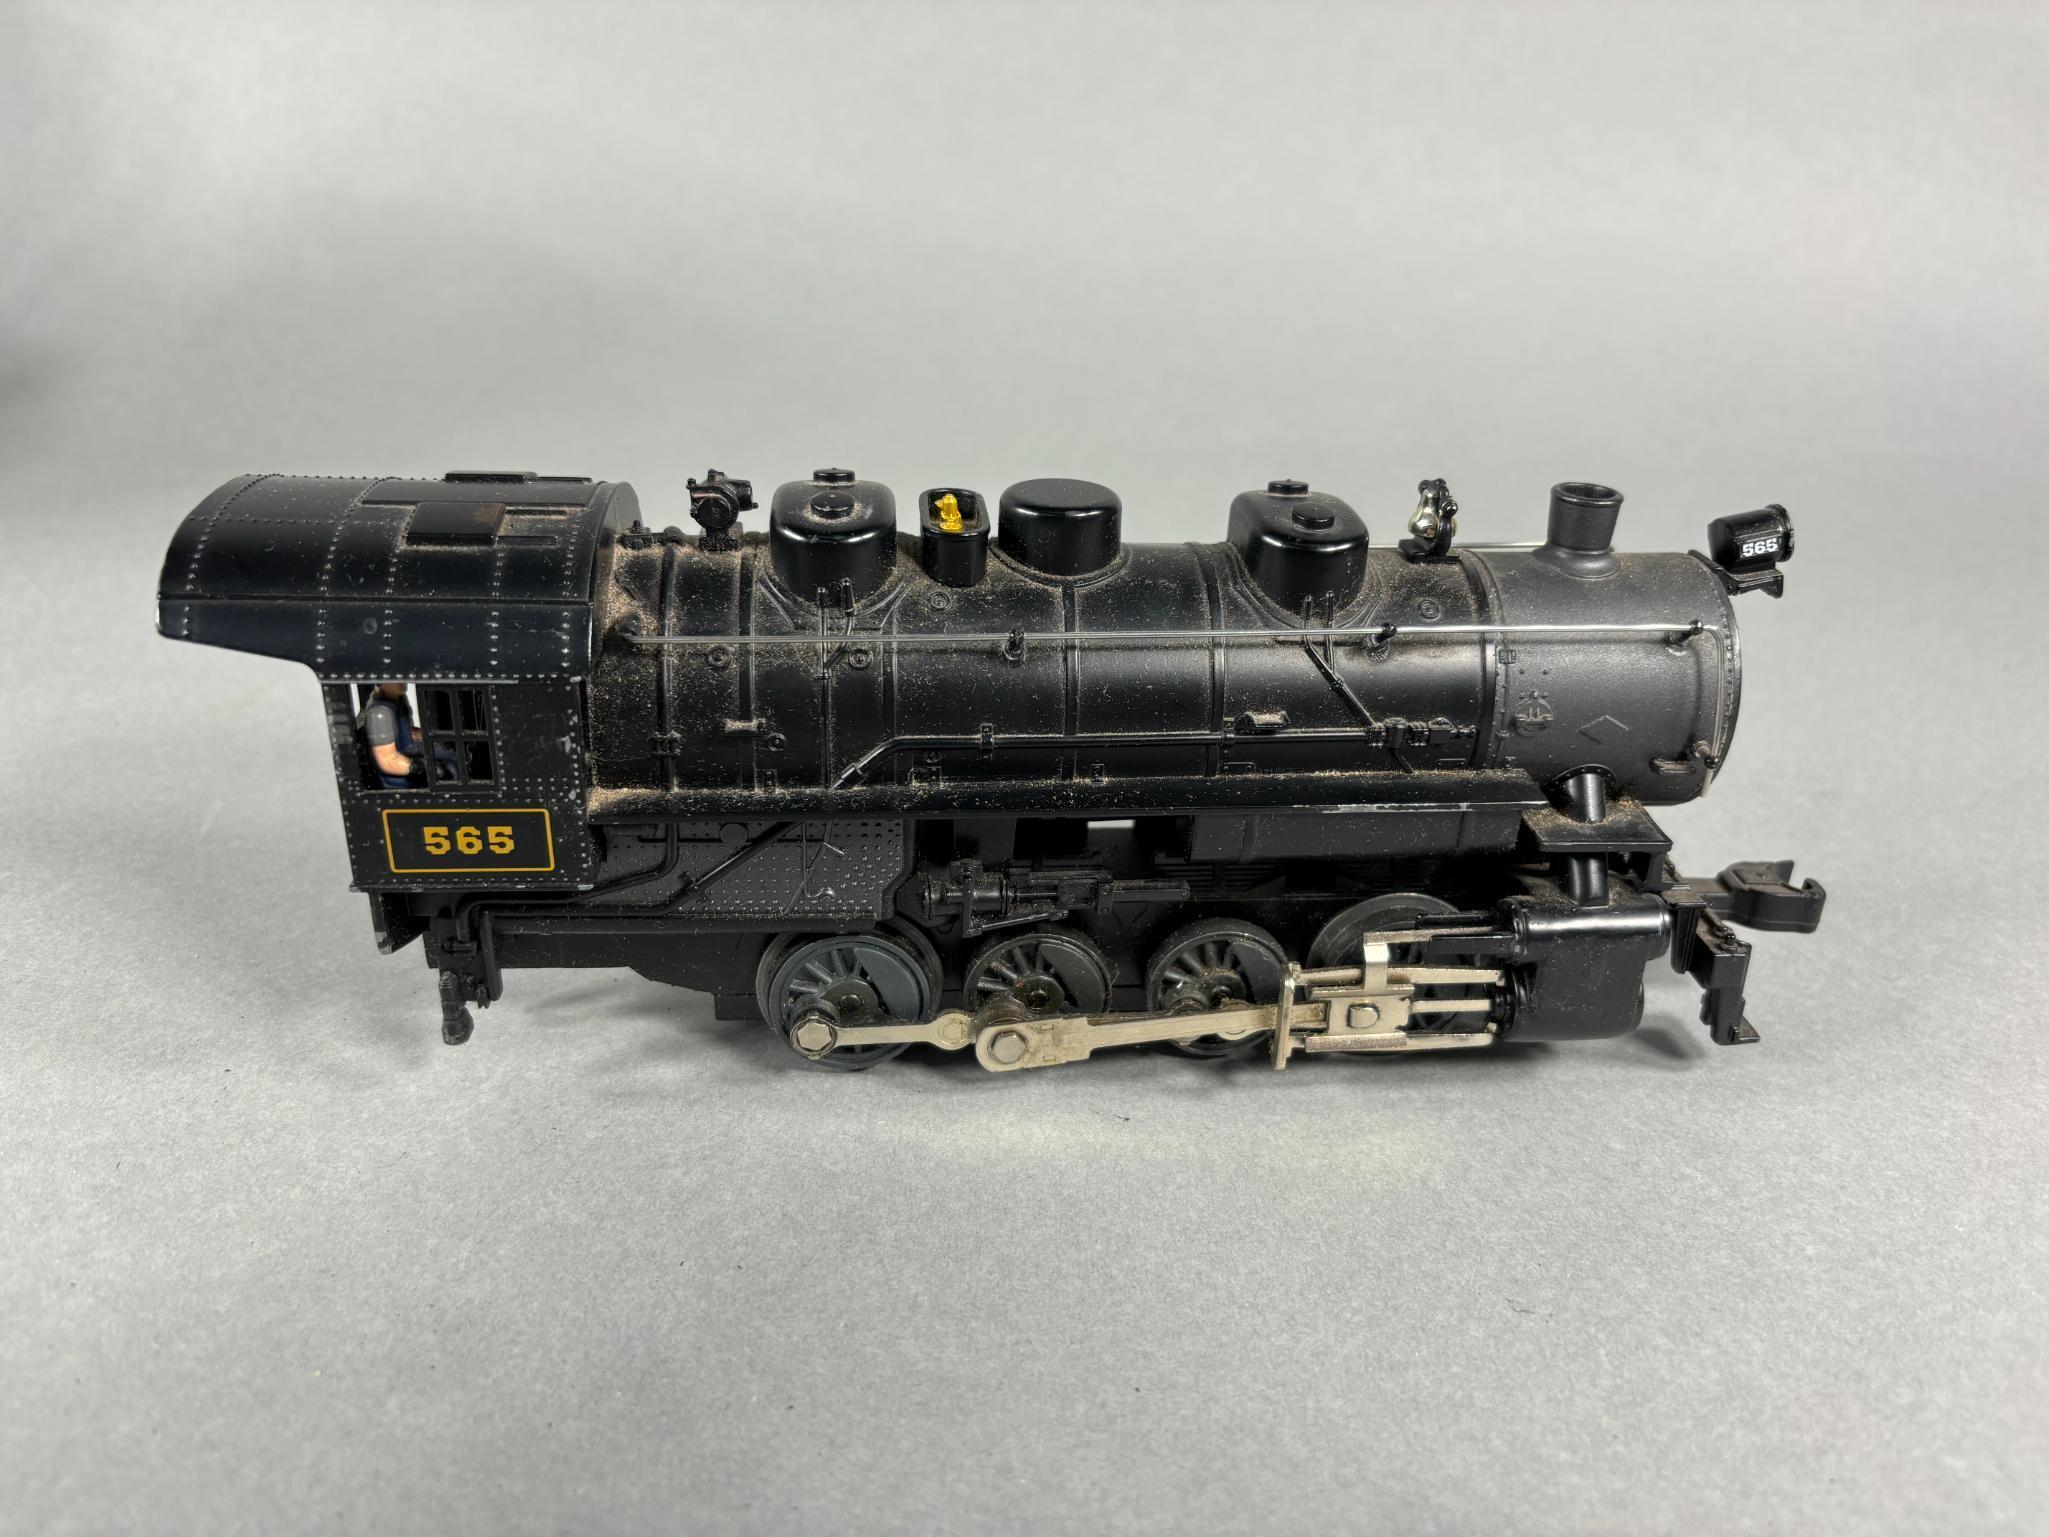 Vintage Lionel Model Railroad Locomotive 565